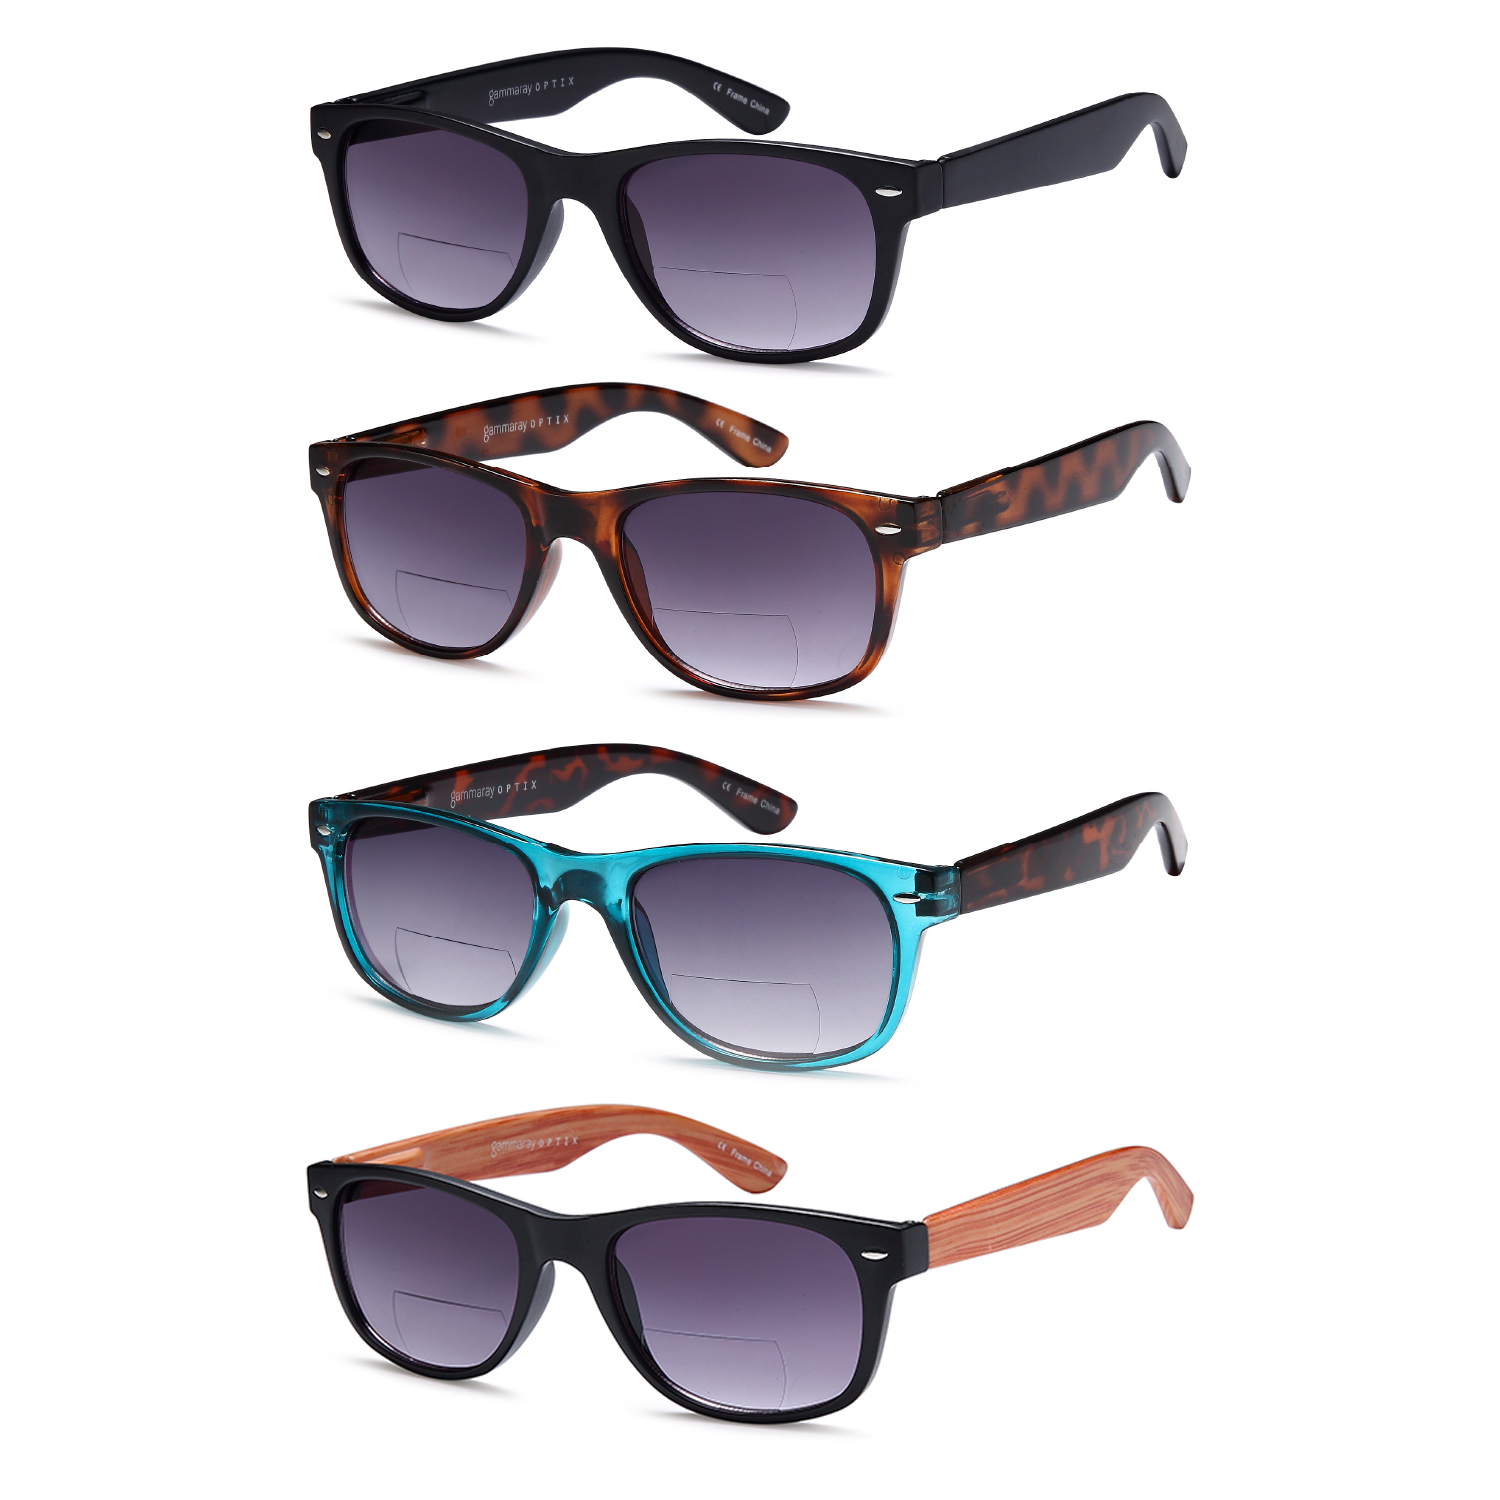 Gamma Ray Bifocal Sunglasses for Men and Women - 4 Pairs Sun Readers Sunglasses - image 1 of 4